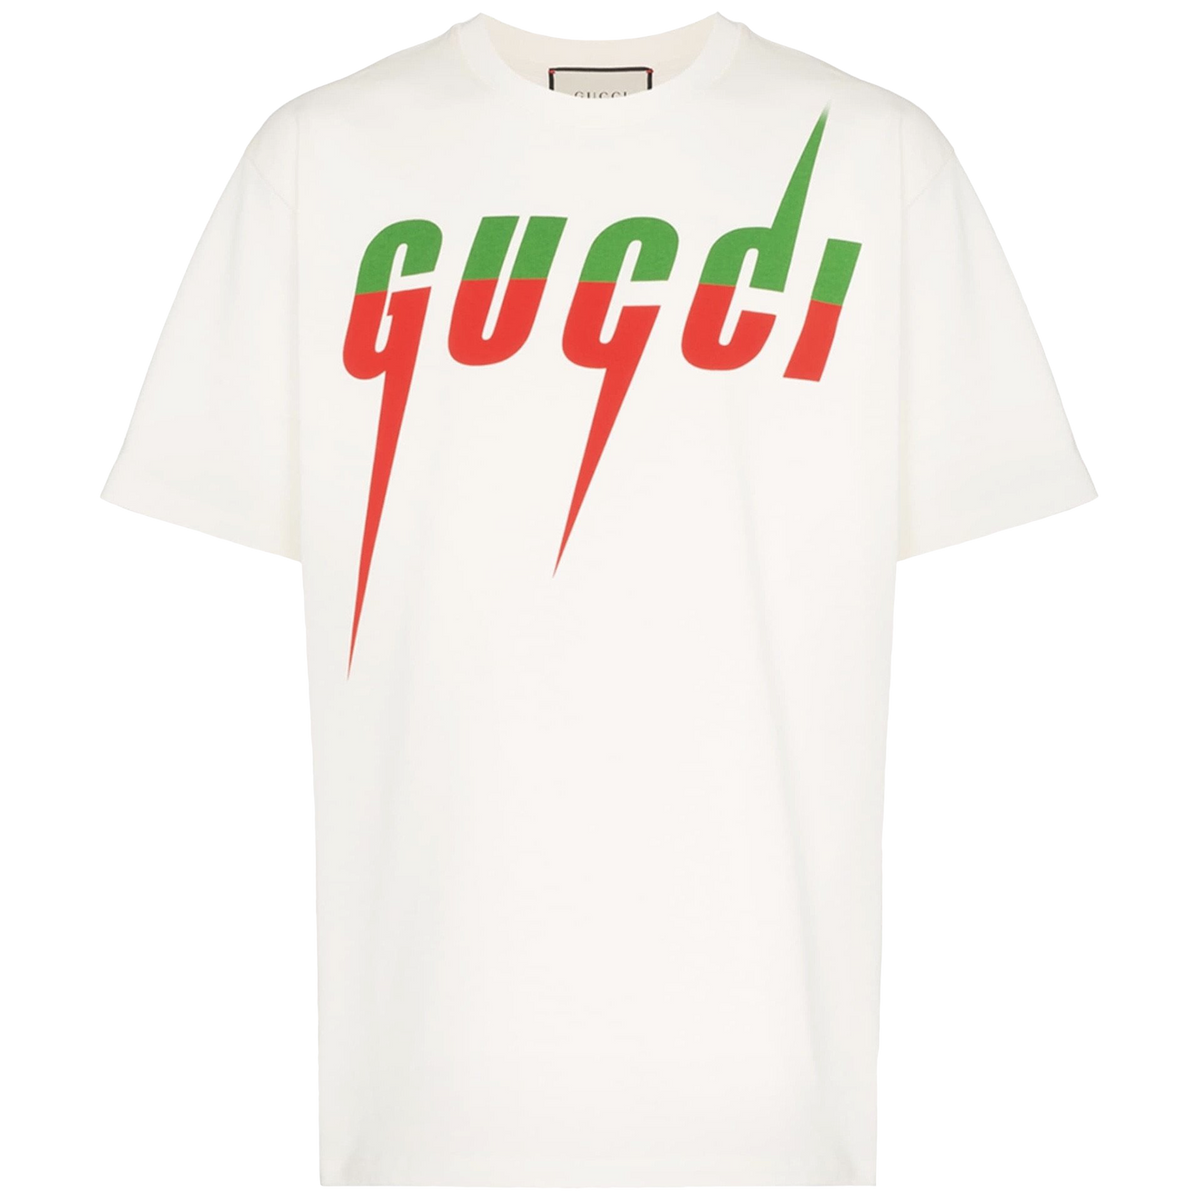 Gucci Shirt Logo Png - Free Logo Image